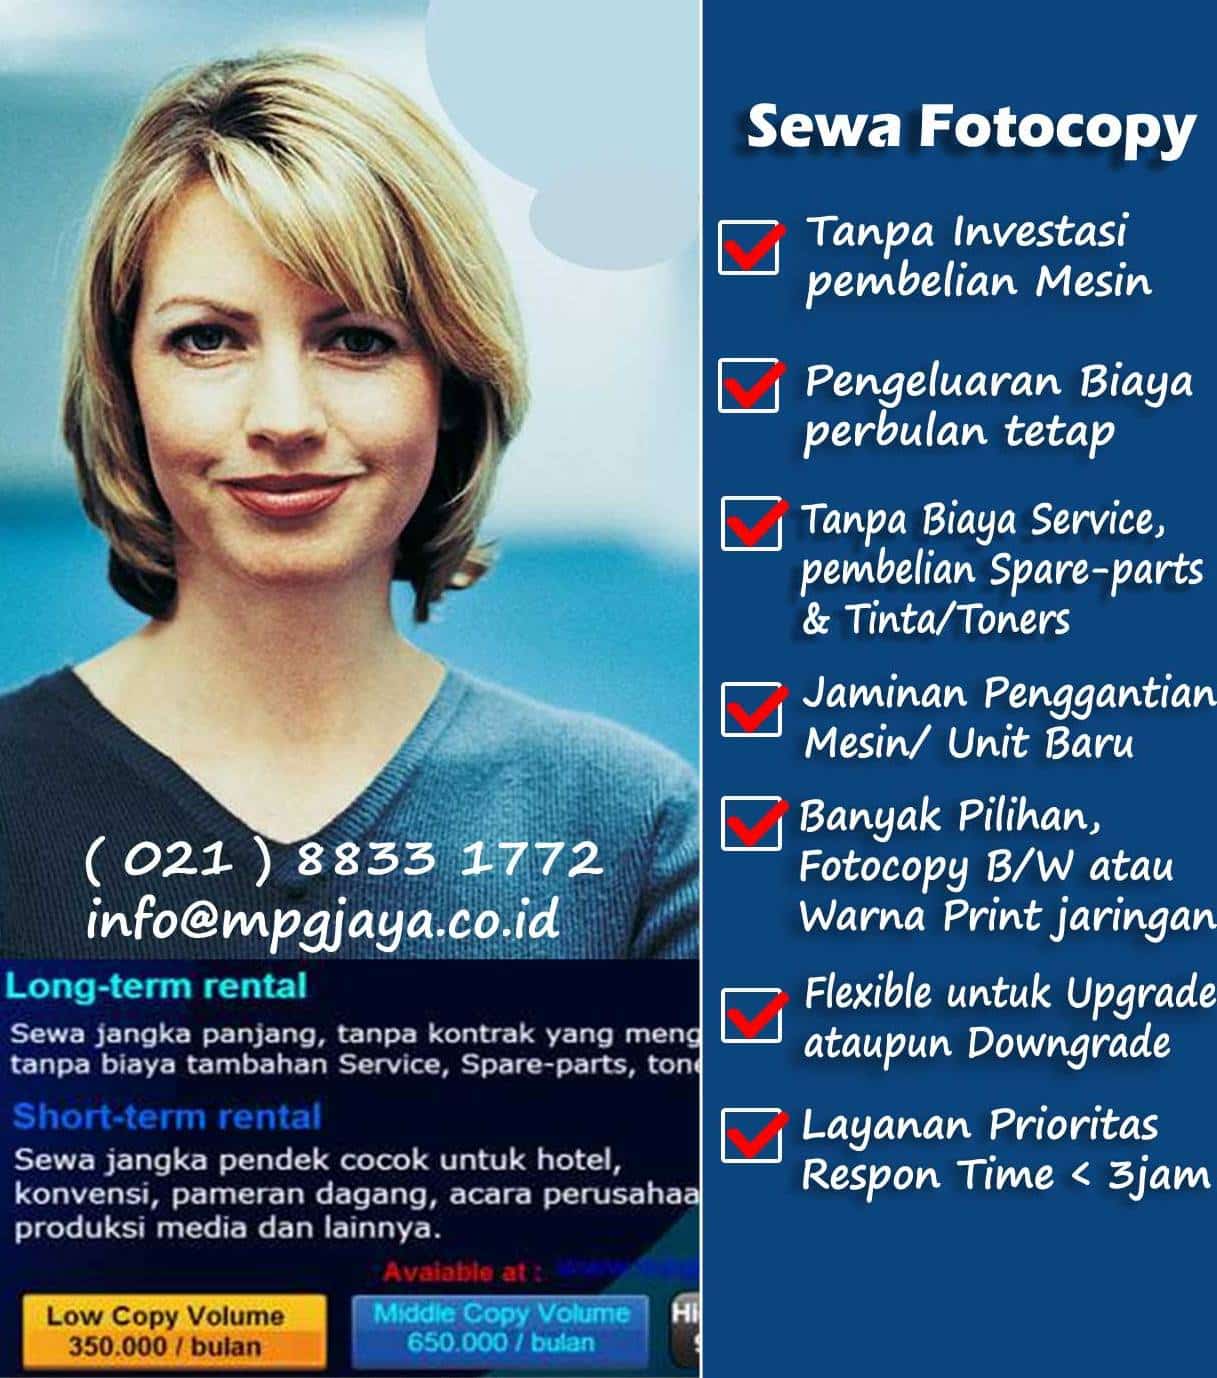 SEWA Fotocopy